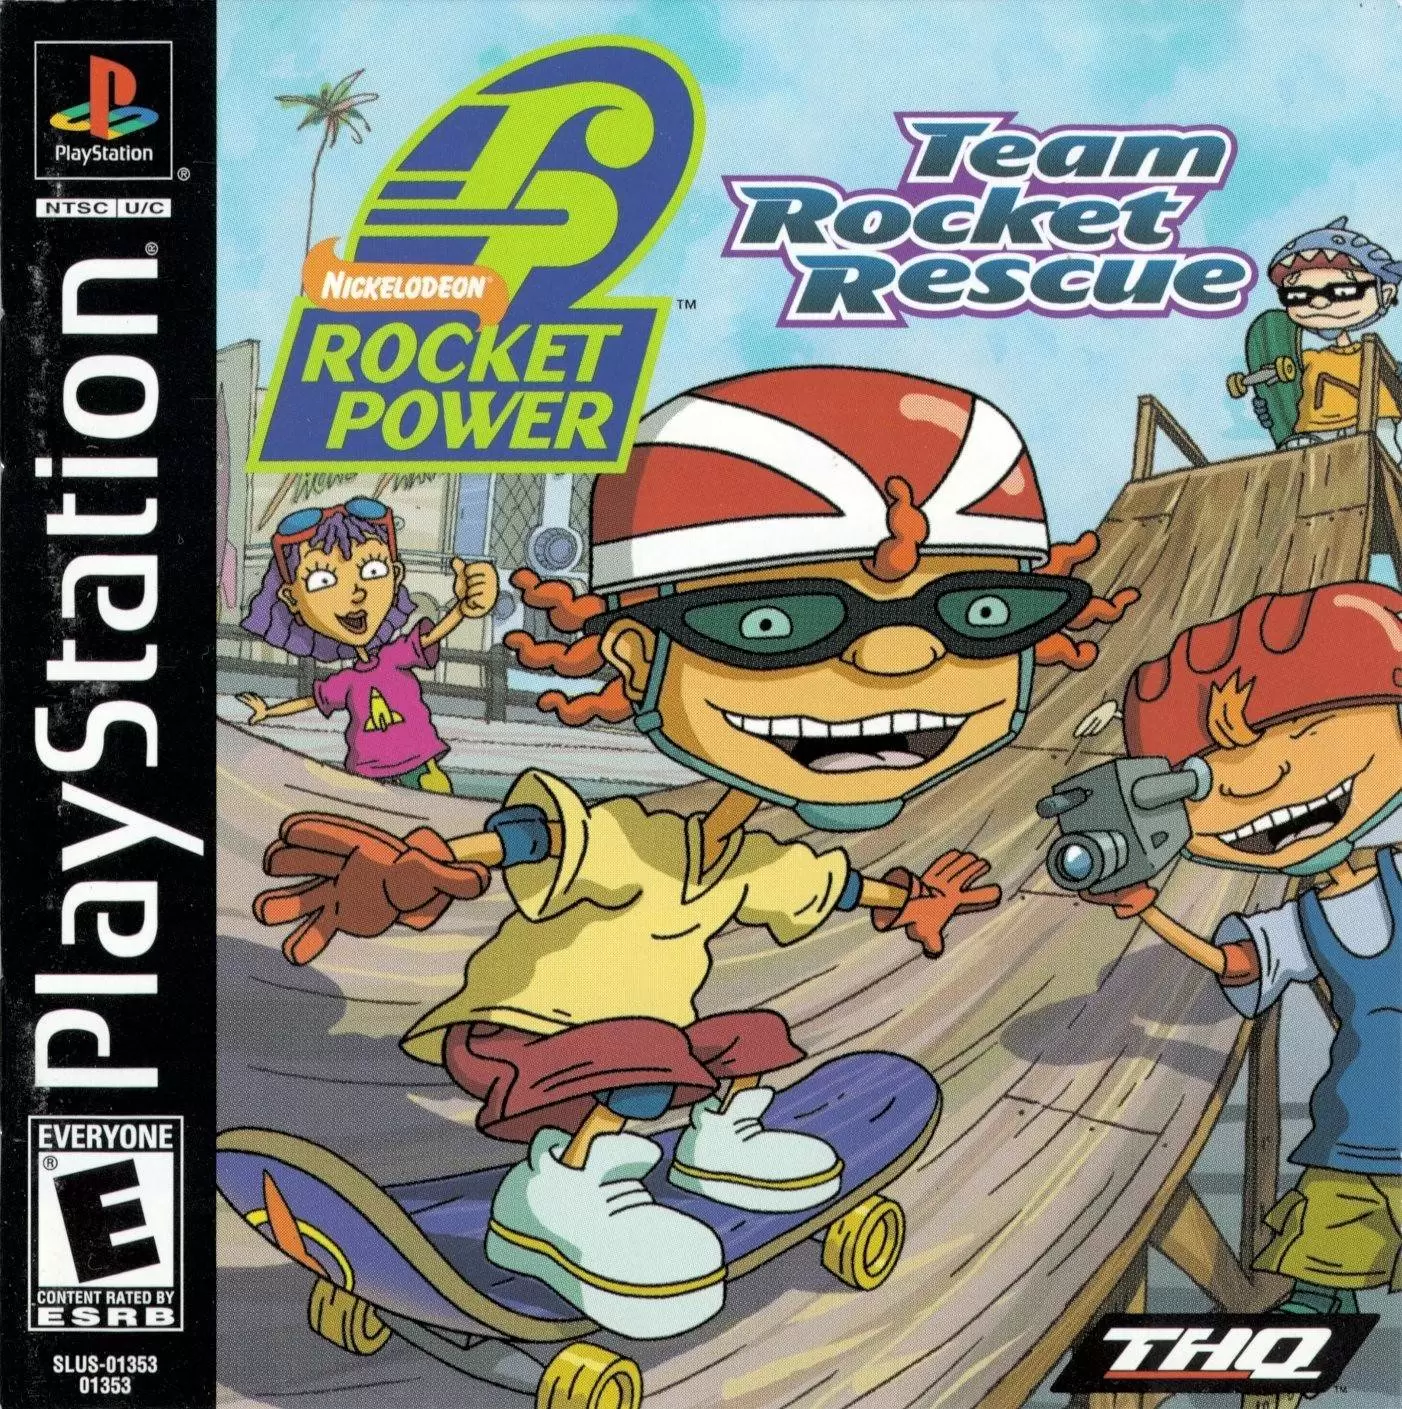 Playstation games - Rocket Power: Team Rocket Rescue